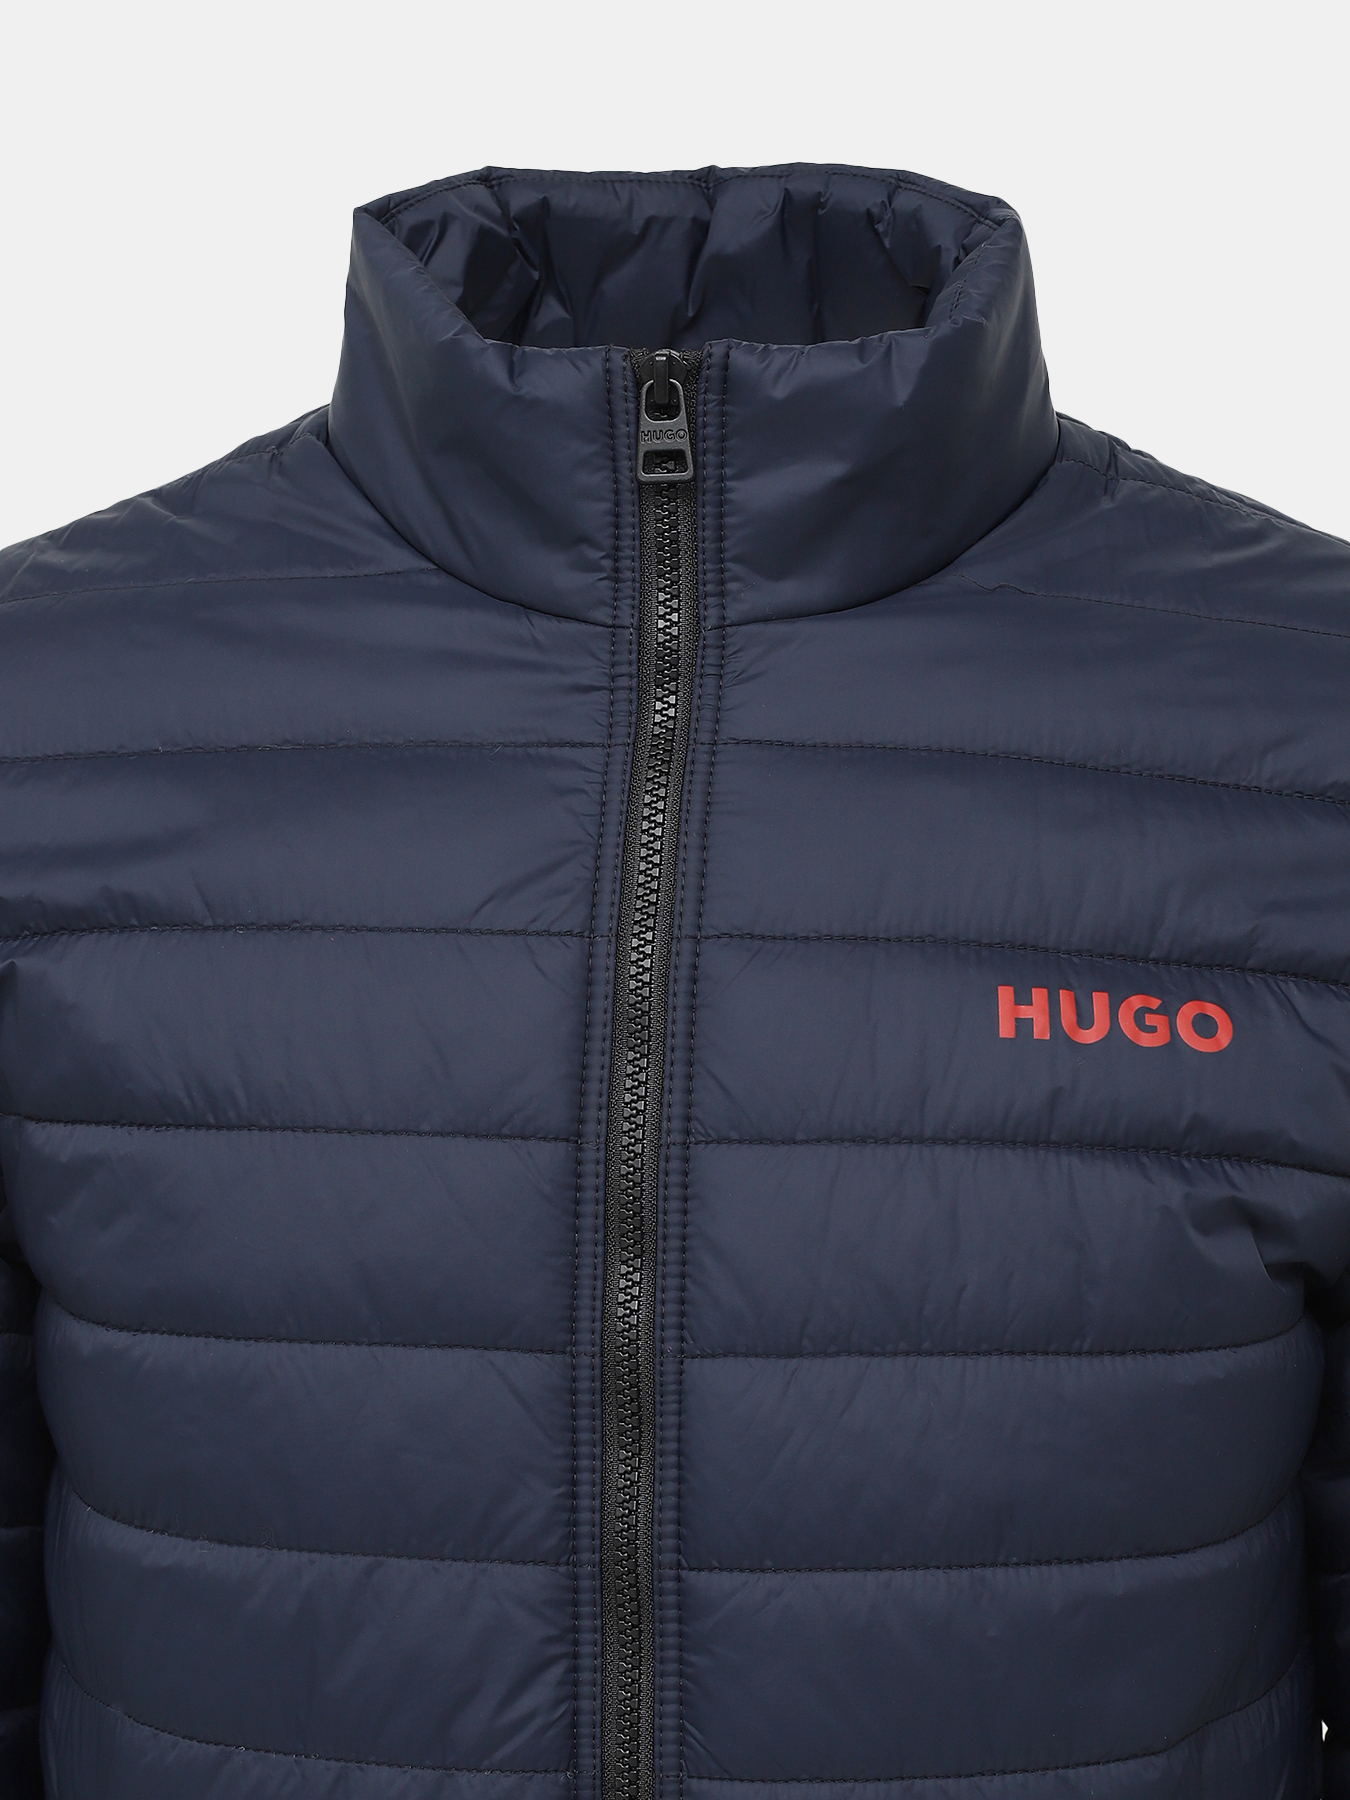 Куртка Benti HUGO 437018-043, цвет темно-синий, размер 48-50 - фото 3